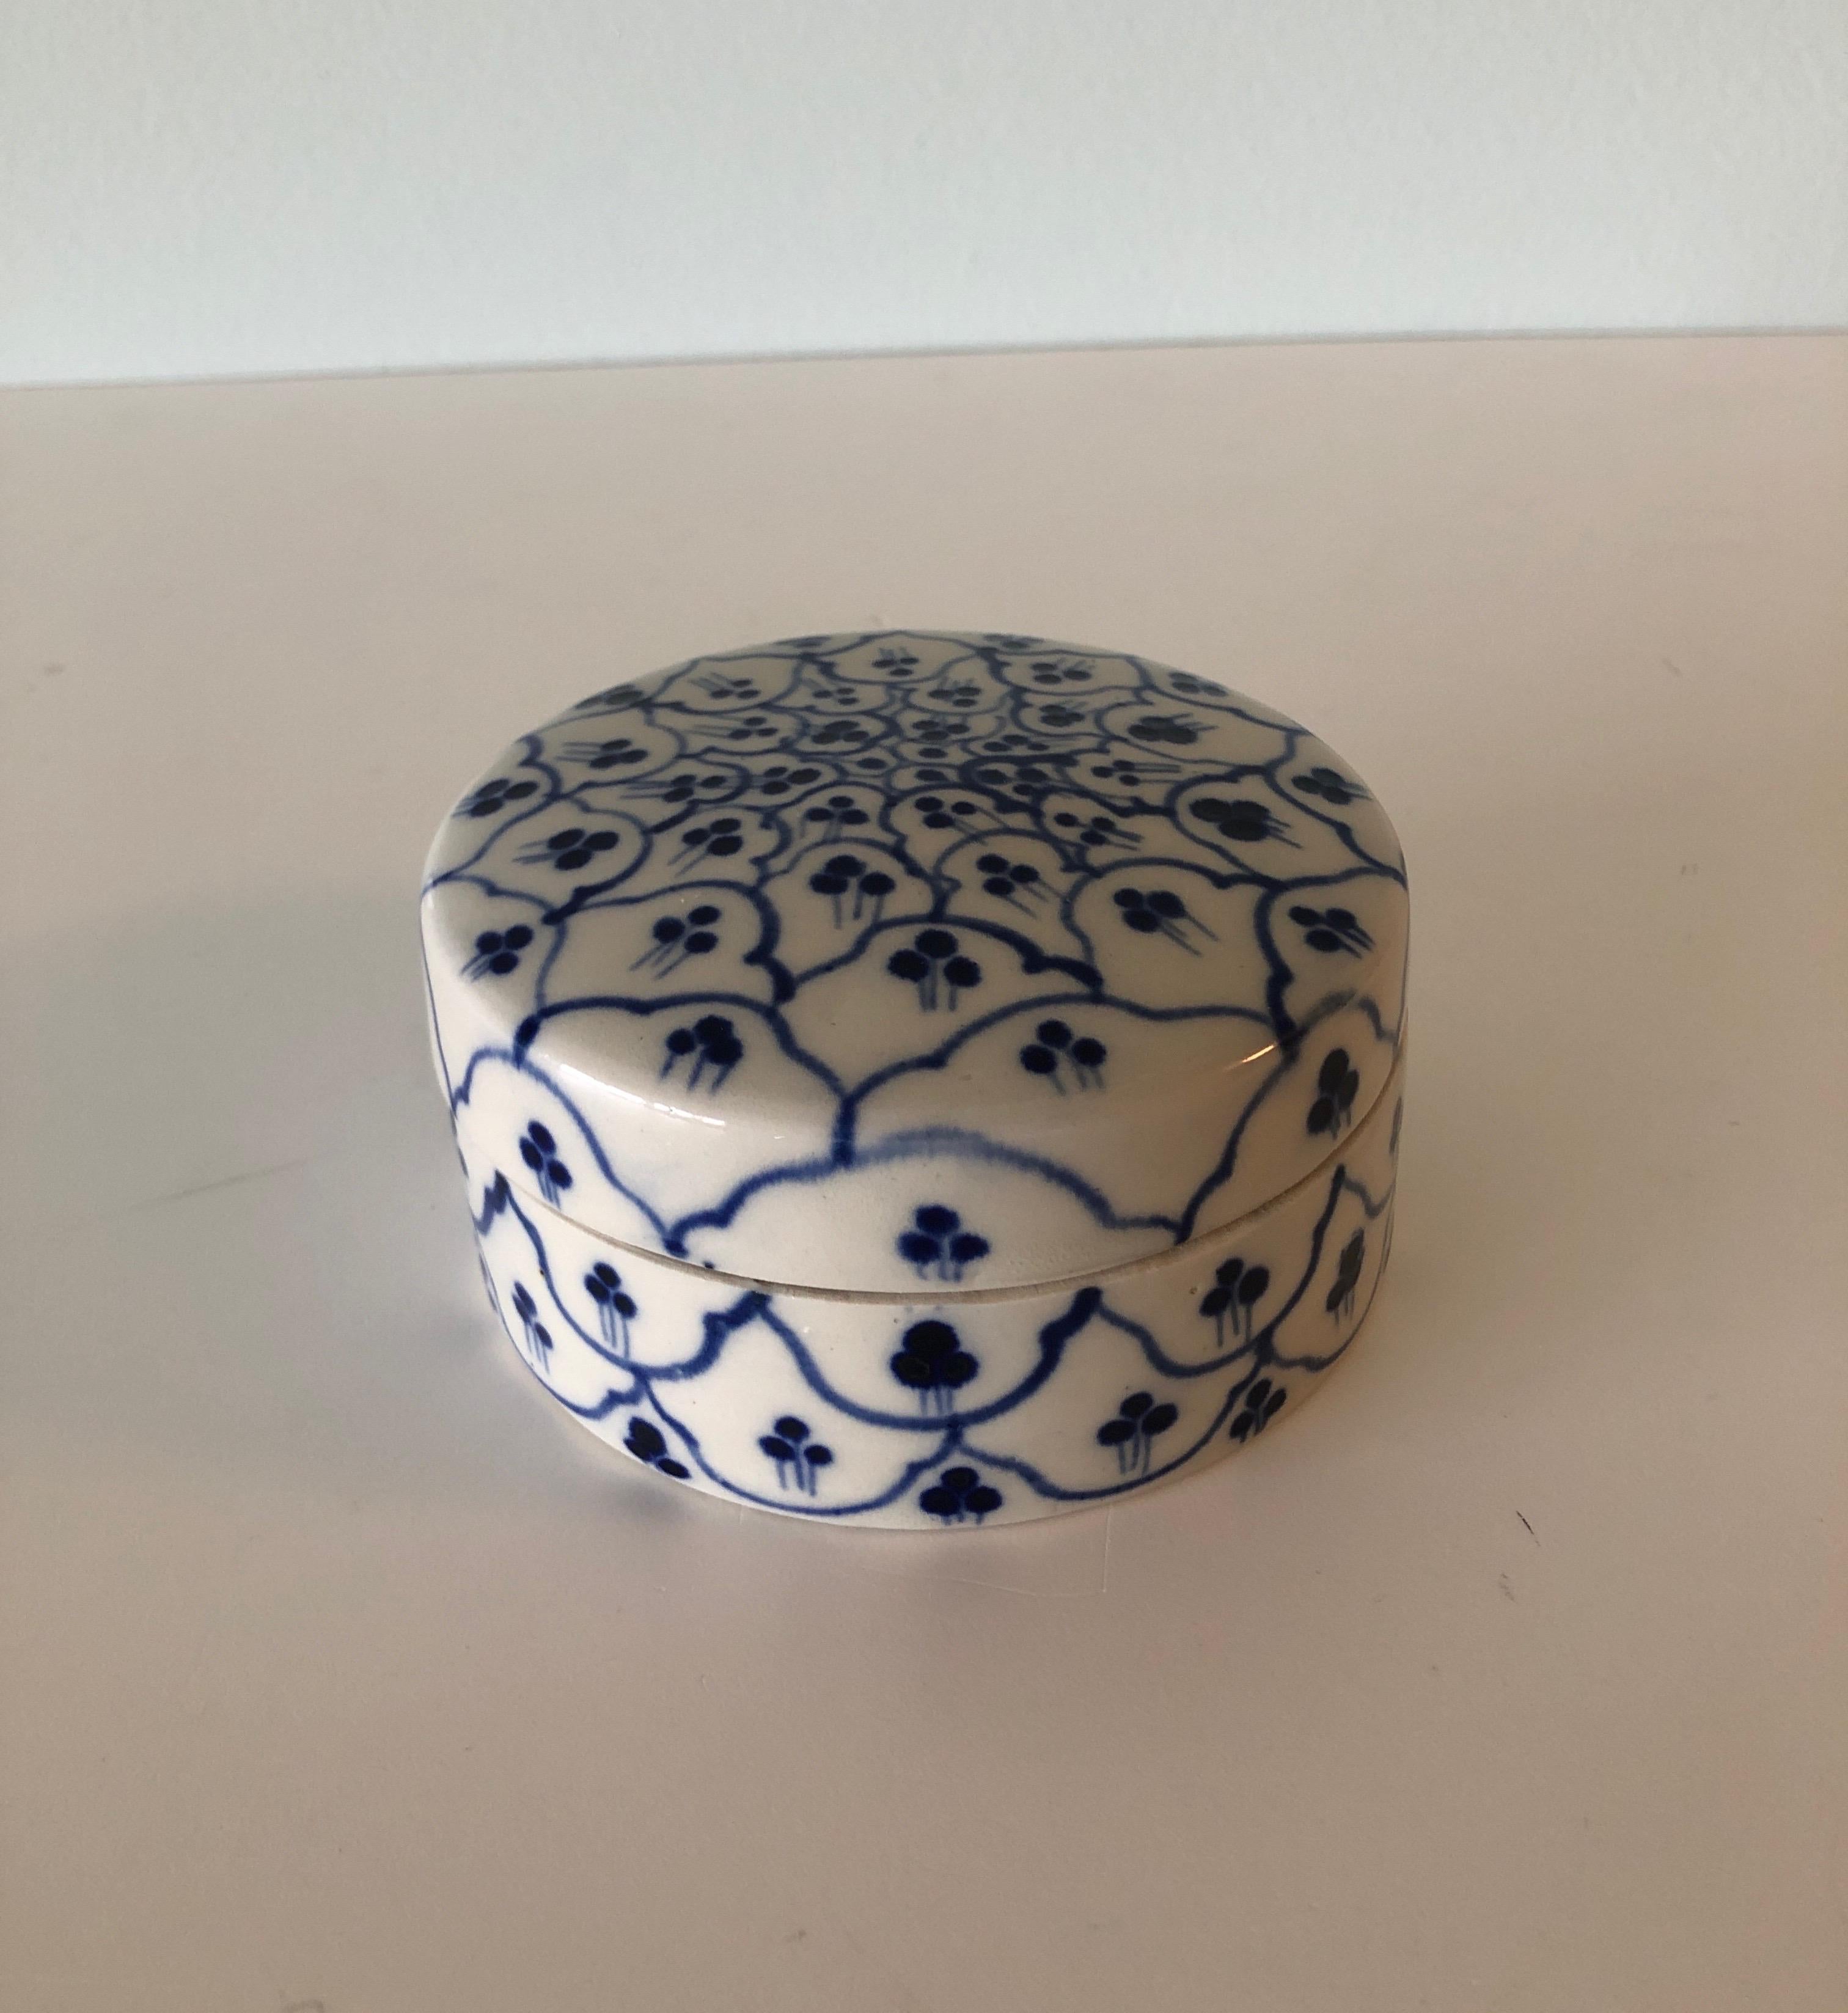 Round blue and white ceramic decorative box
Size: 4.5”D x 2”H.